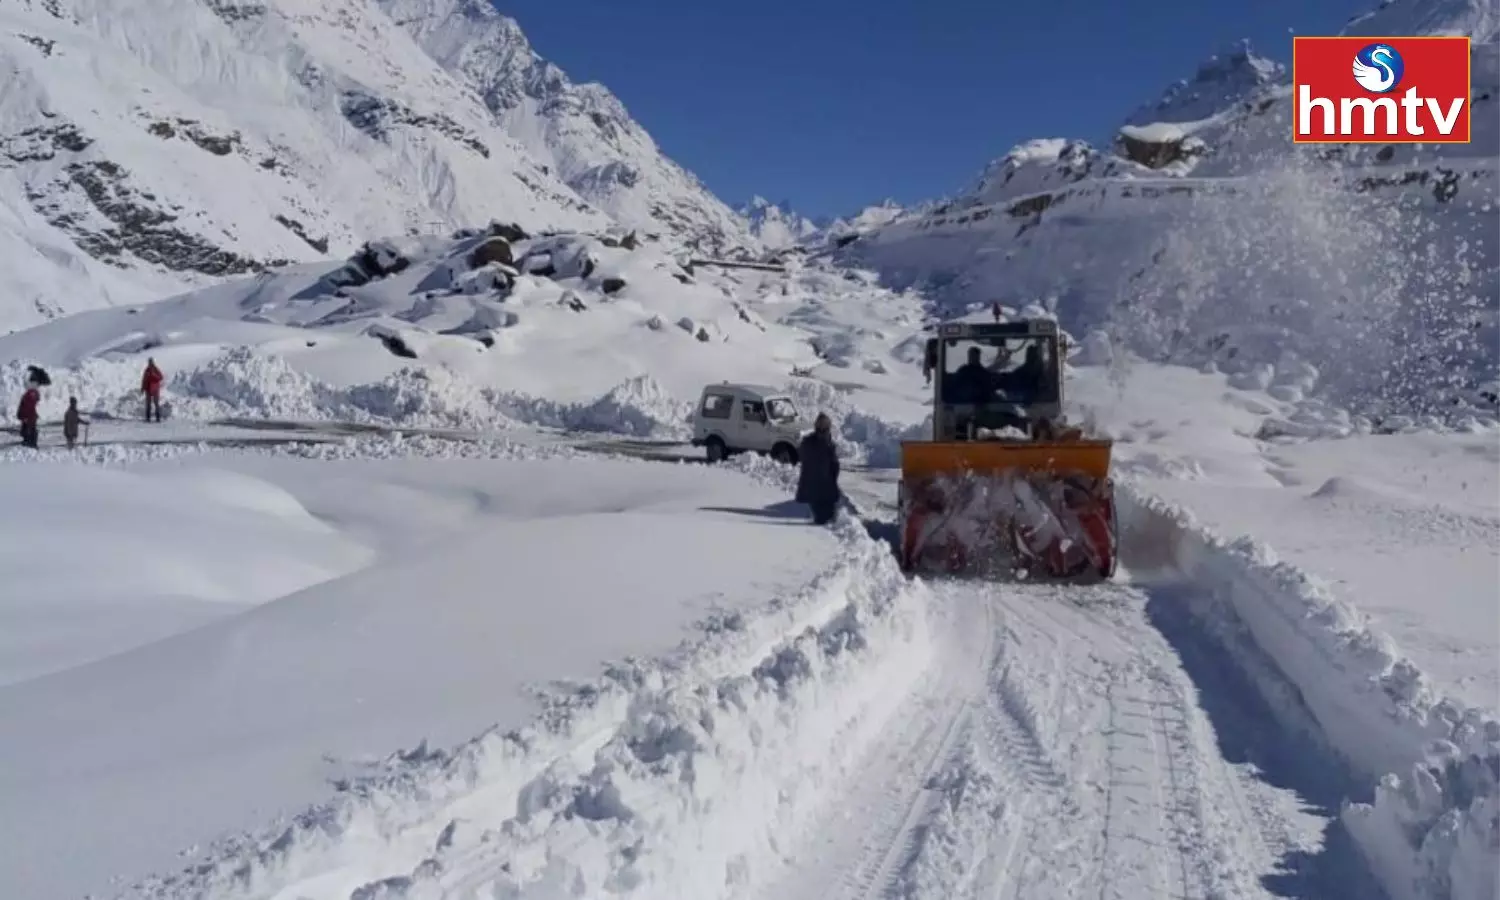 Snow blanket in Himachal Pradesh